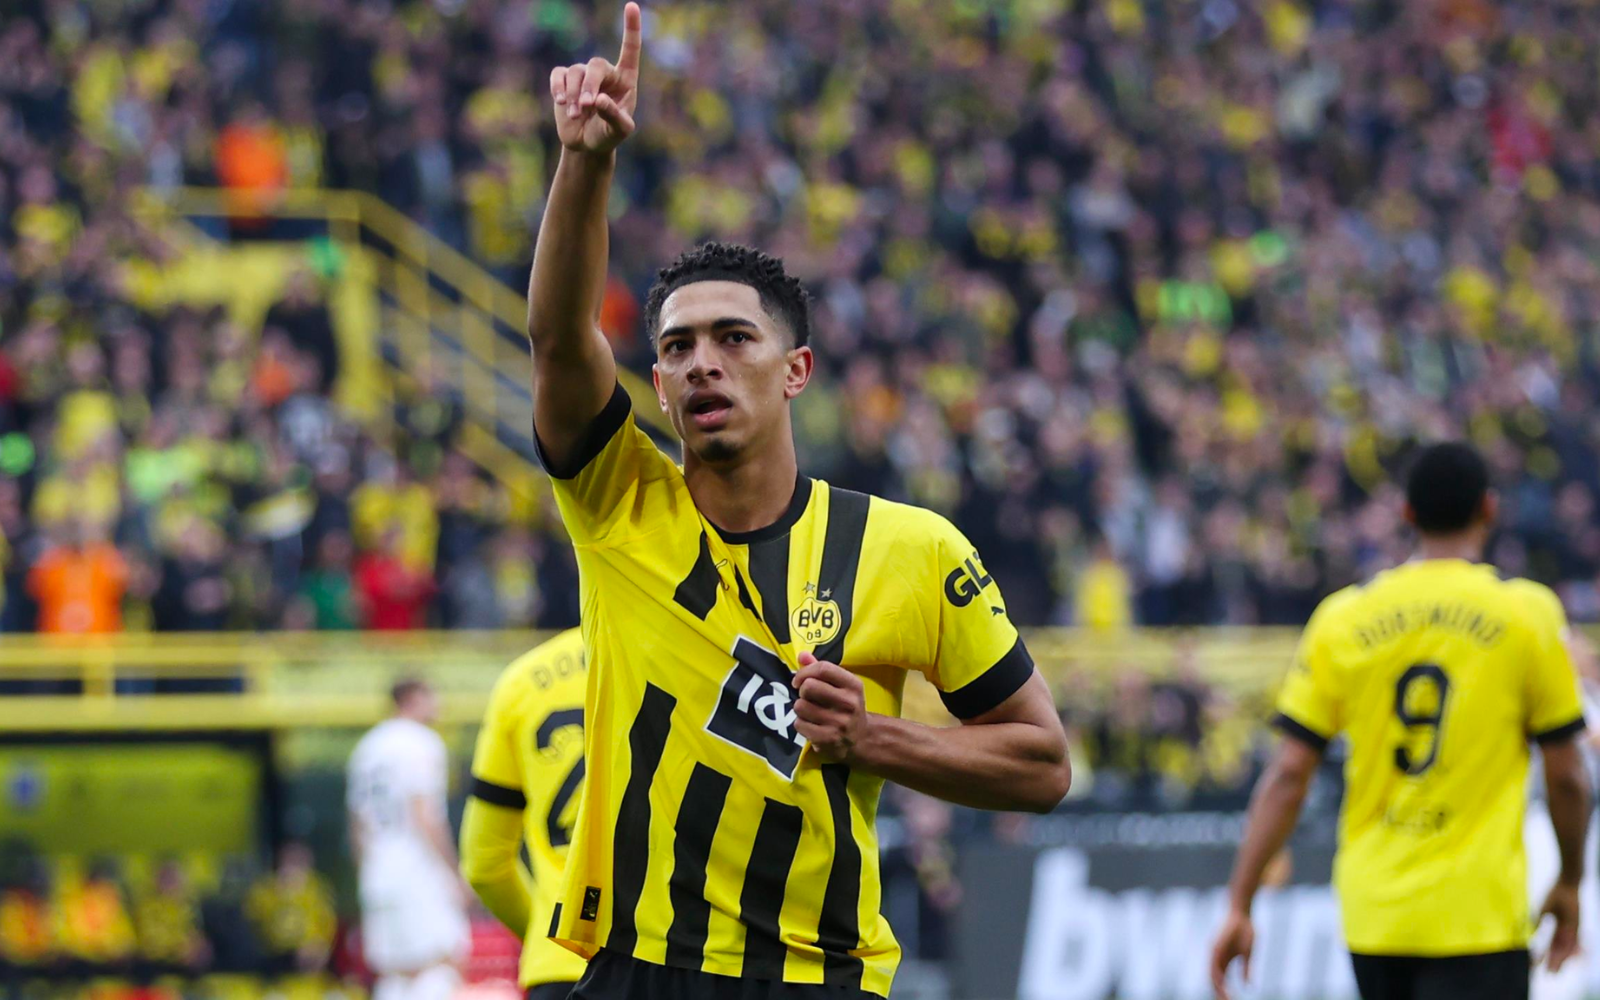 Vooruitzicht Mannelijkheid condoom The importance of the relationship between PUMA and Borussia Dortmund